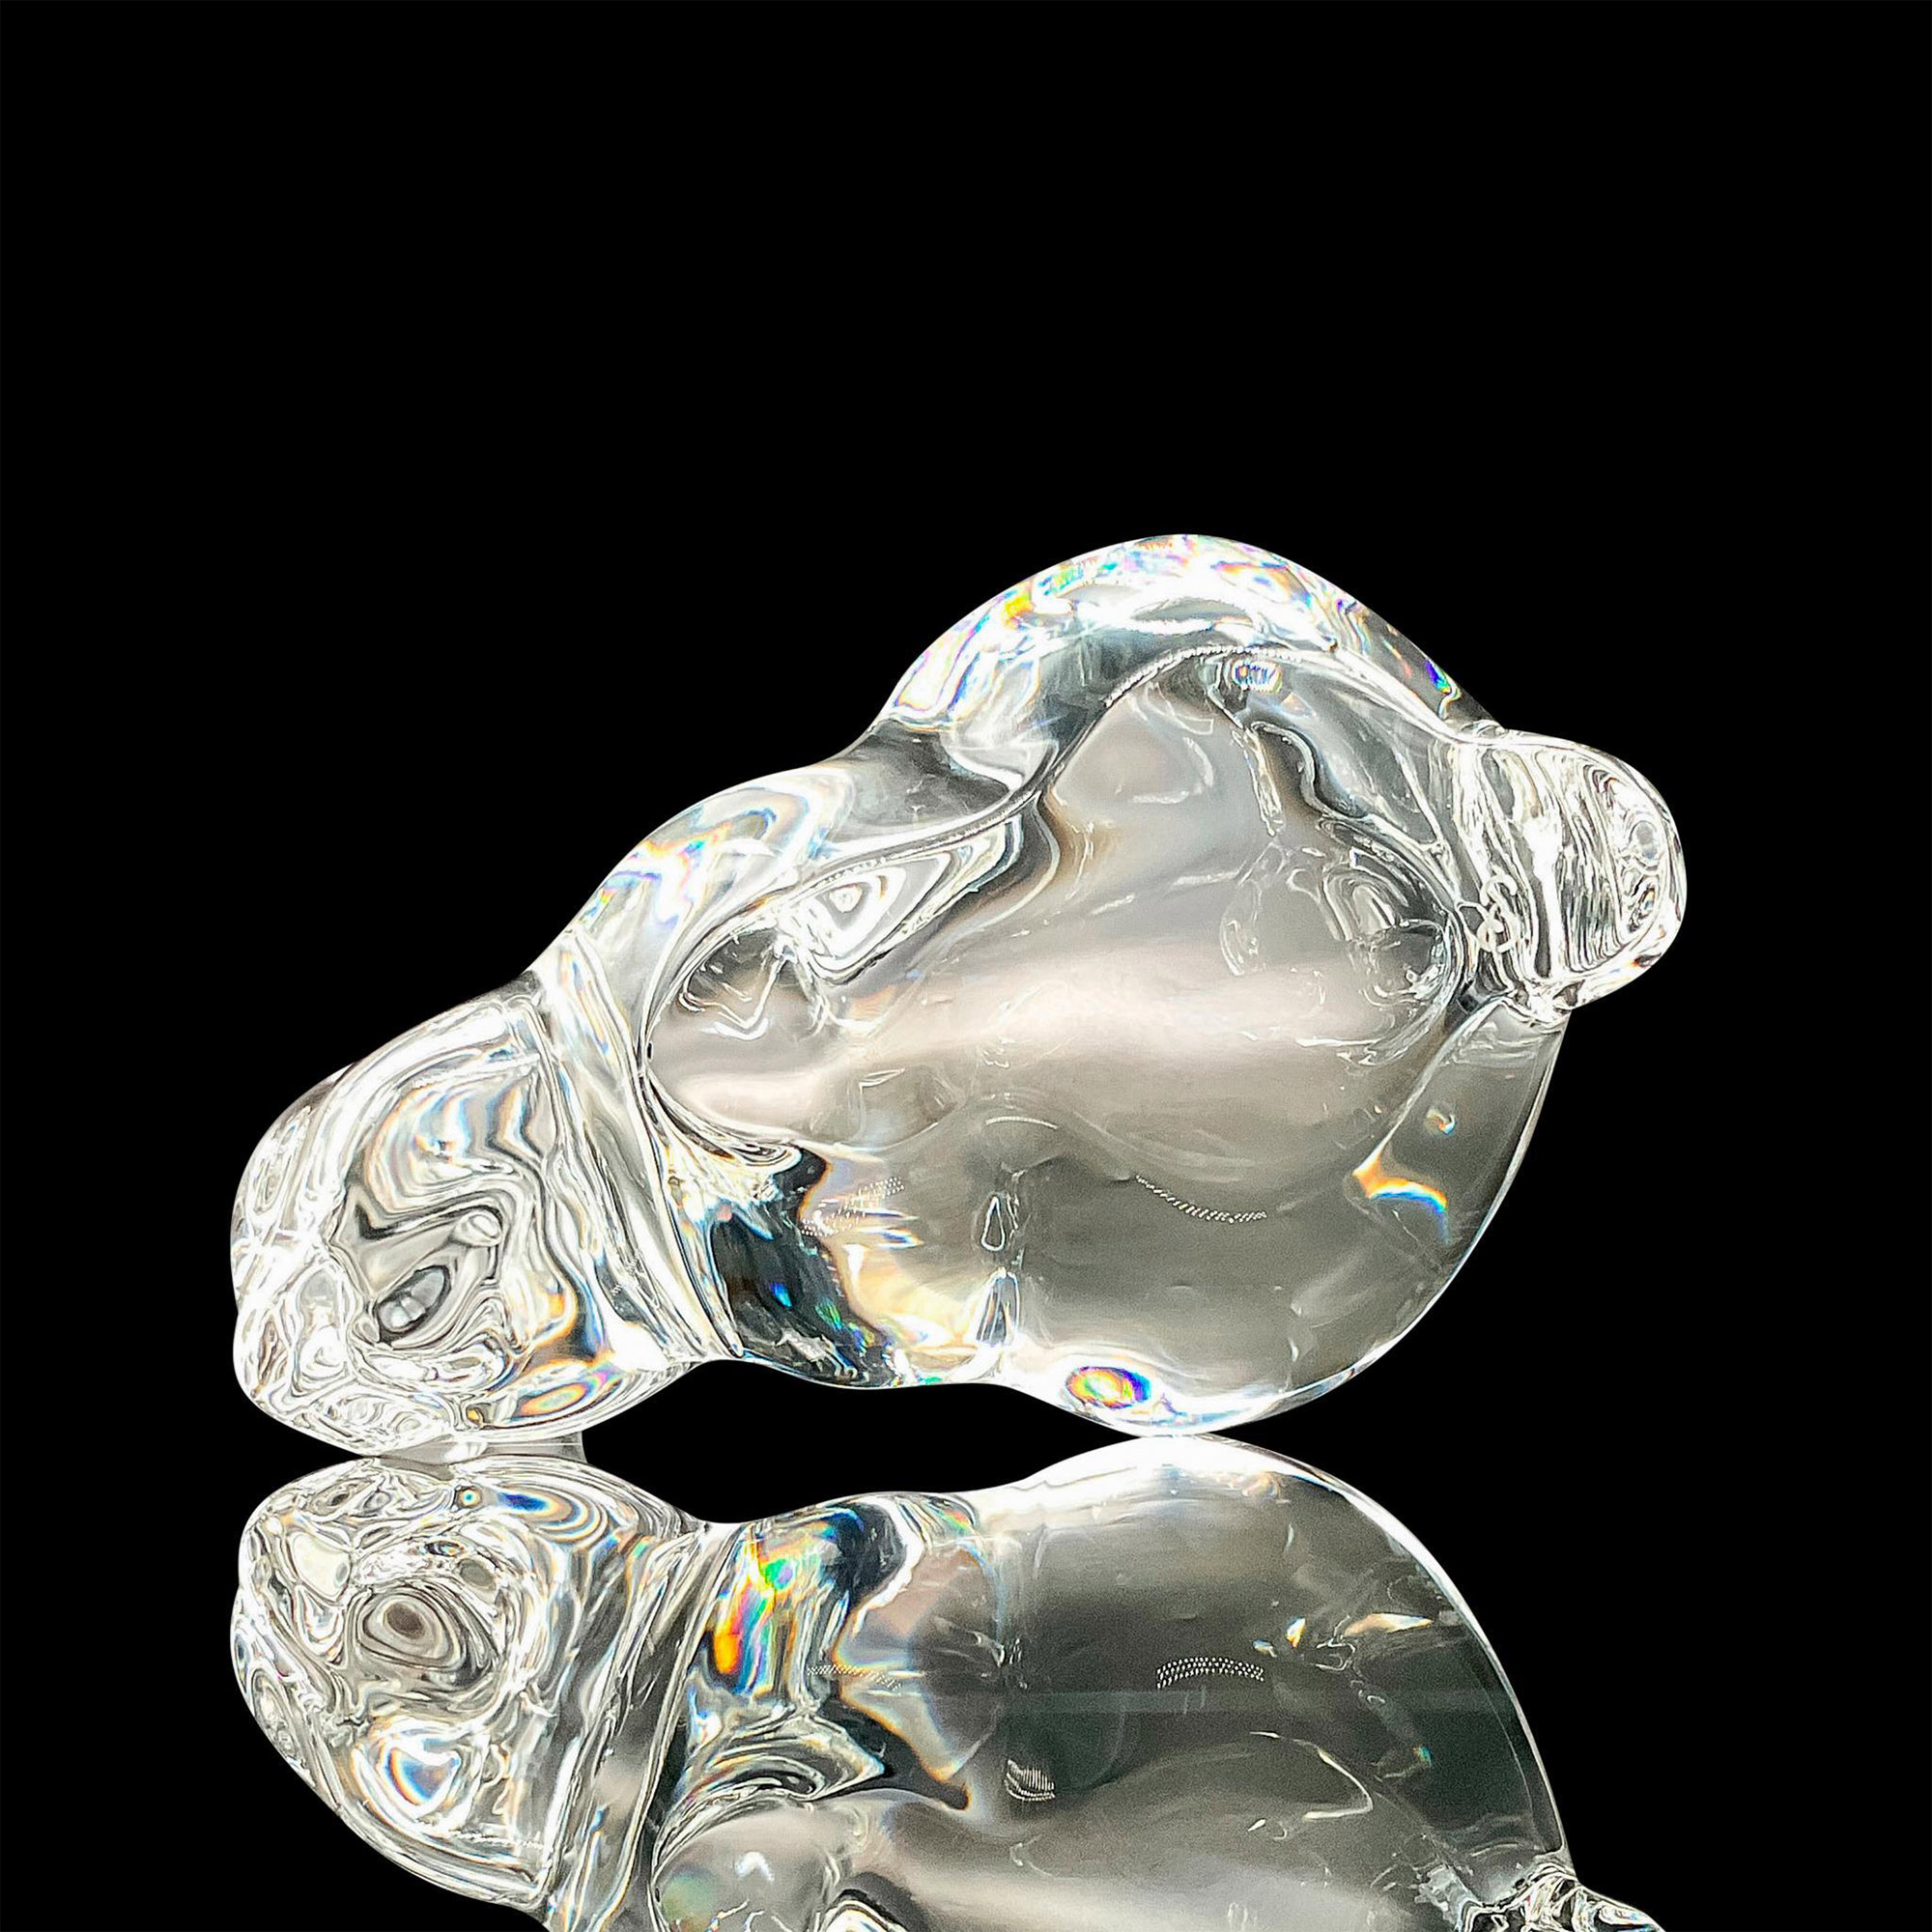 Ebeling & Reuss Crystal Figurine by Swarovski, Rabbit - Image 3 of 3